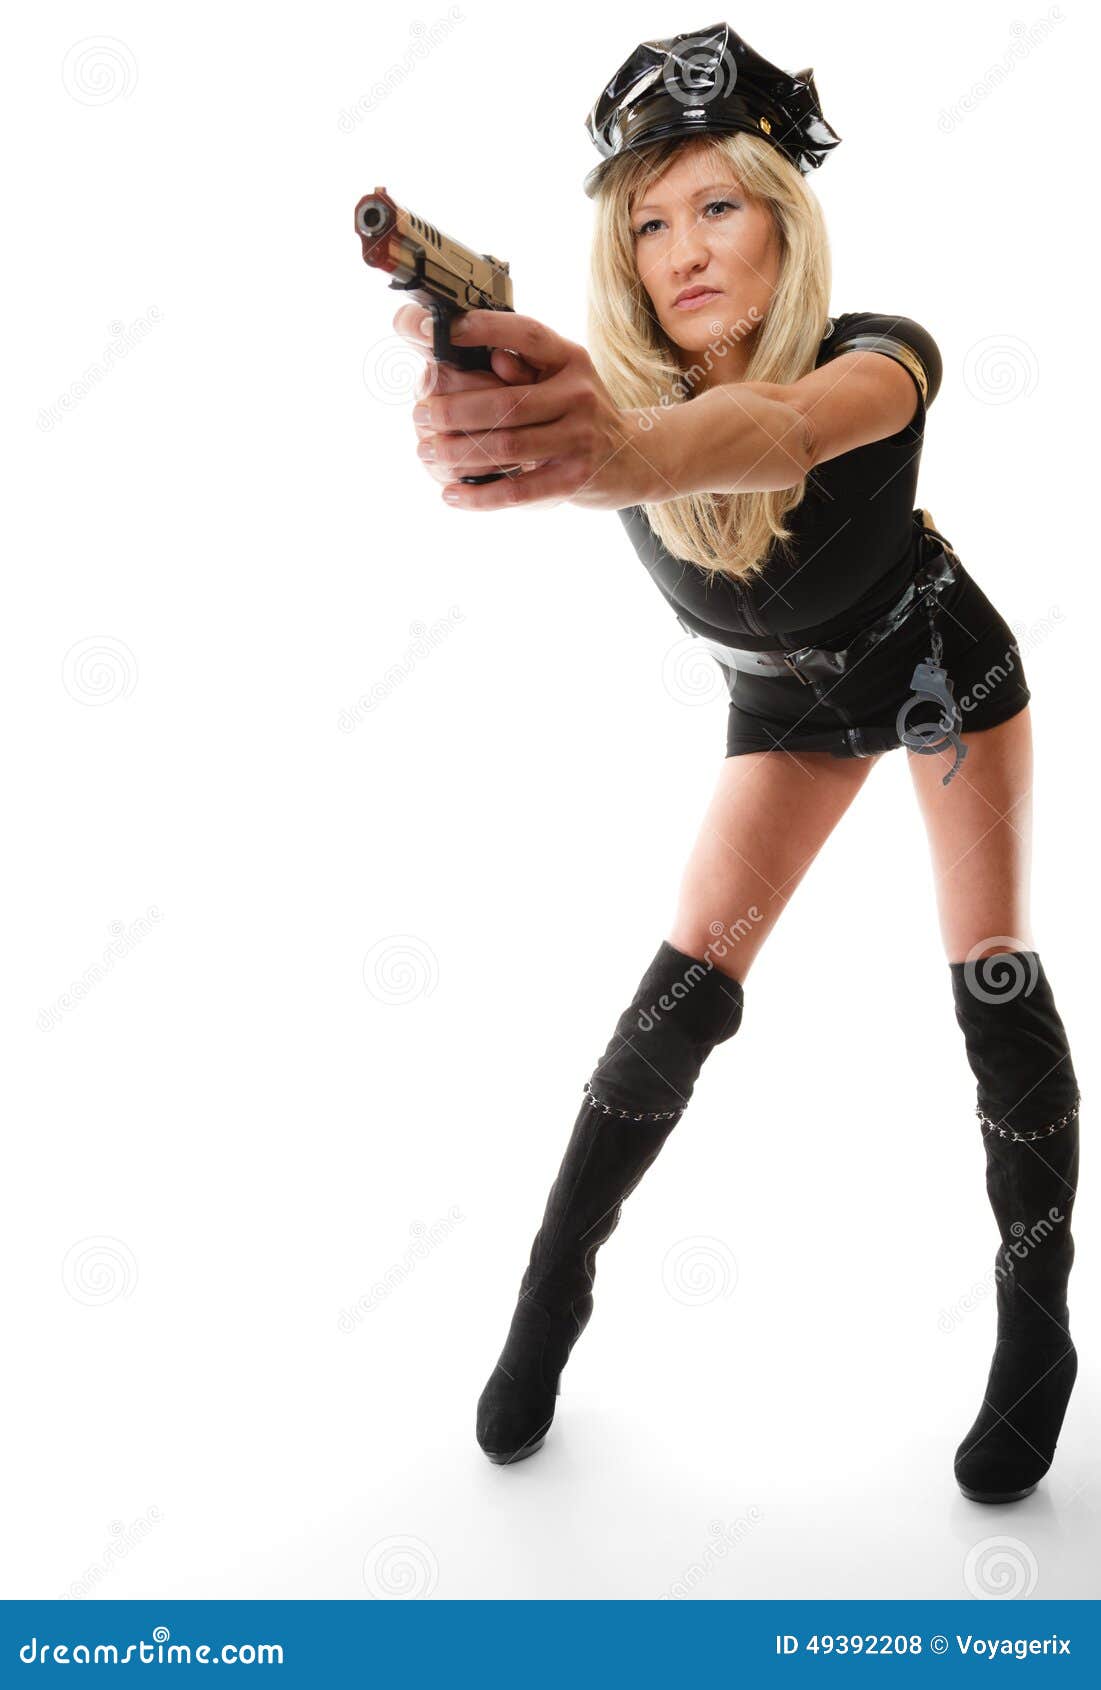 cop holding a gun pose